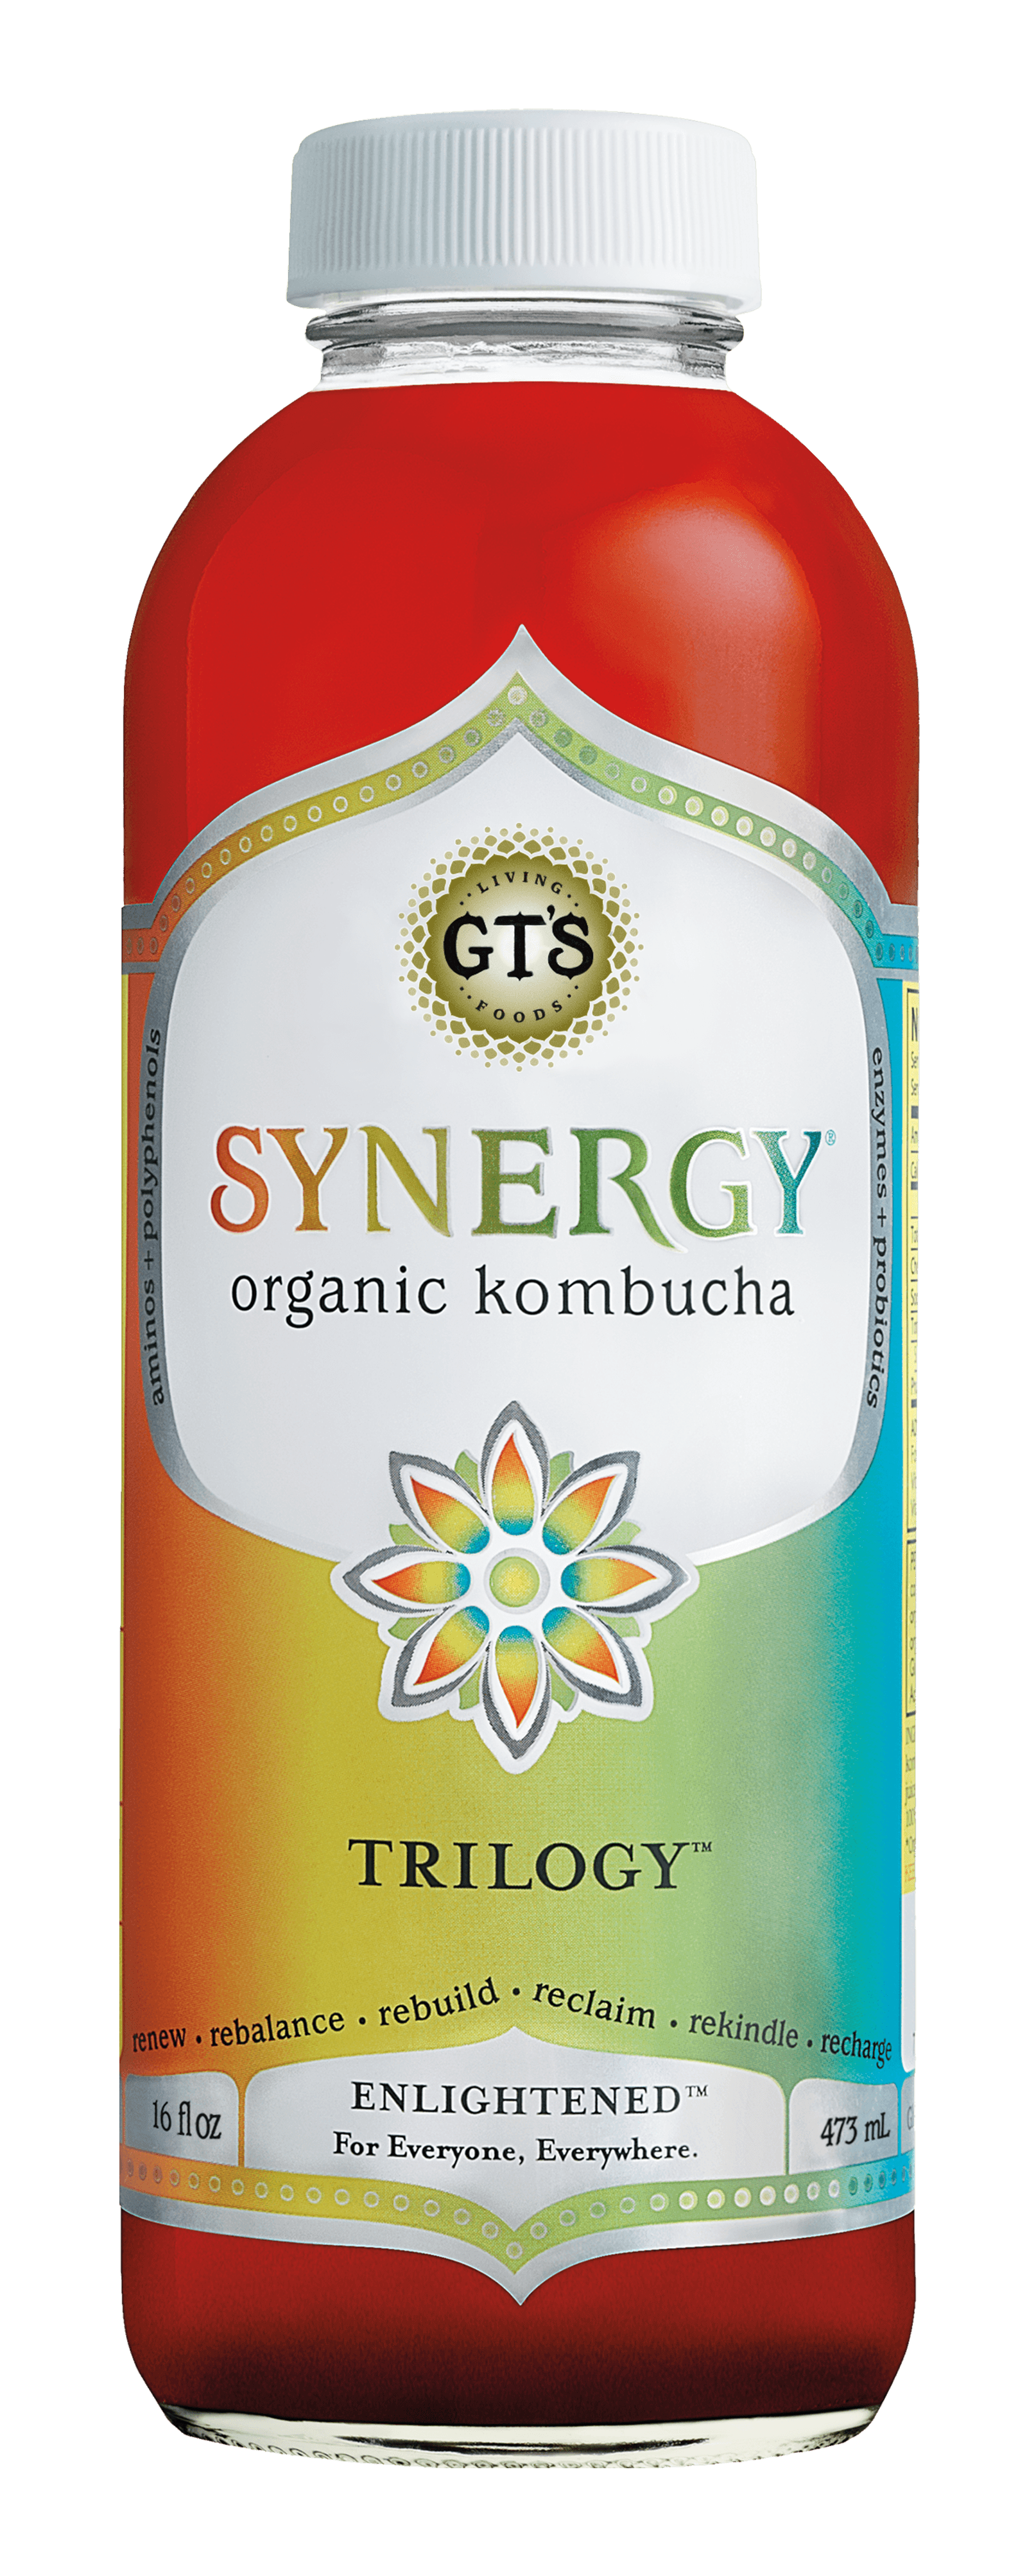 GT'S Synergy Trilogy Kombucha Drink Organic & Raw, 16 Fl Oz